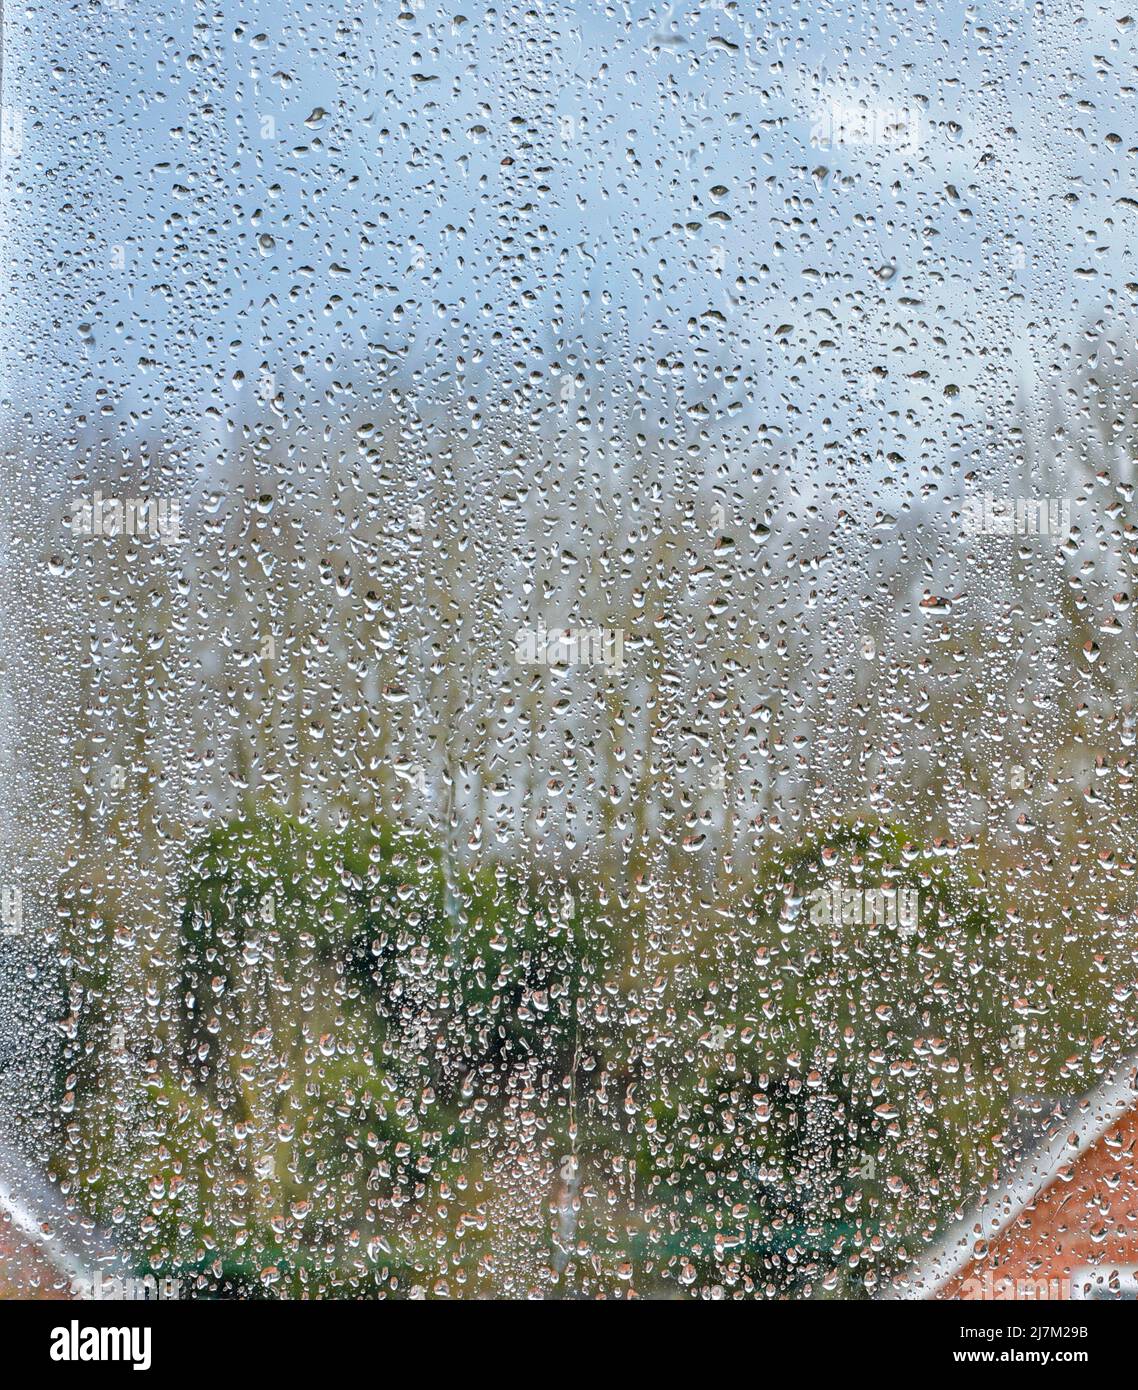 Rain drops on a window. Stock Photo